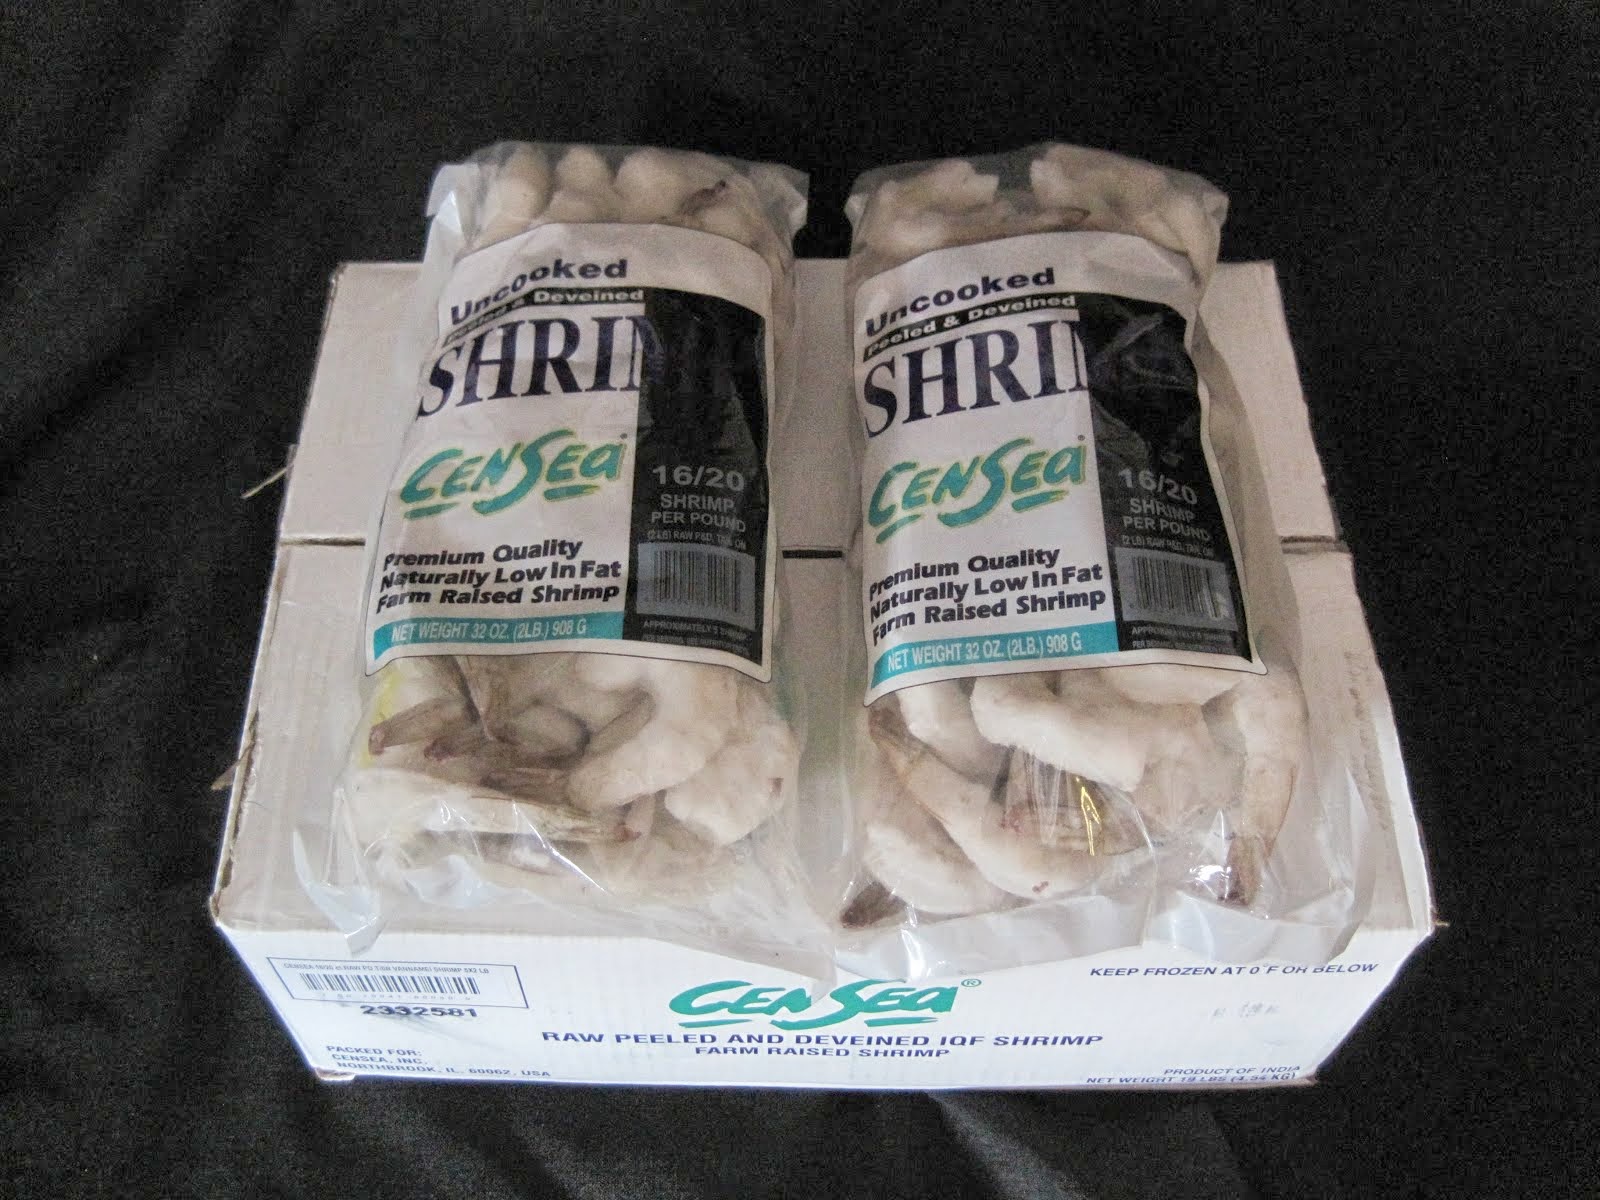 Shrimp 16-20 Peeled & deveined w/tail on - 5/2 lb - Item # 21677 & 21678 for Single Bag